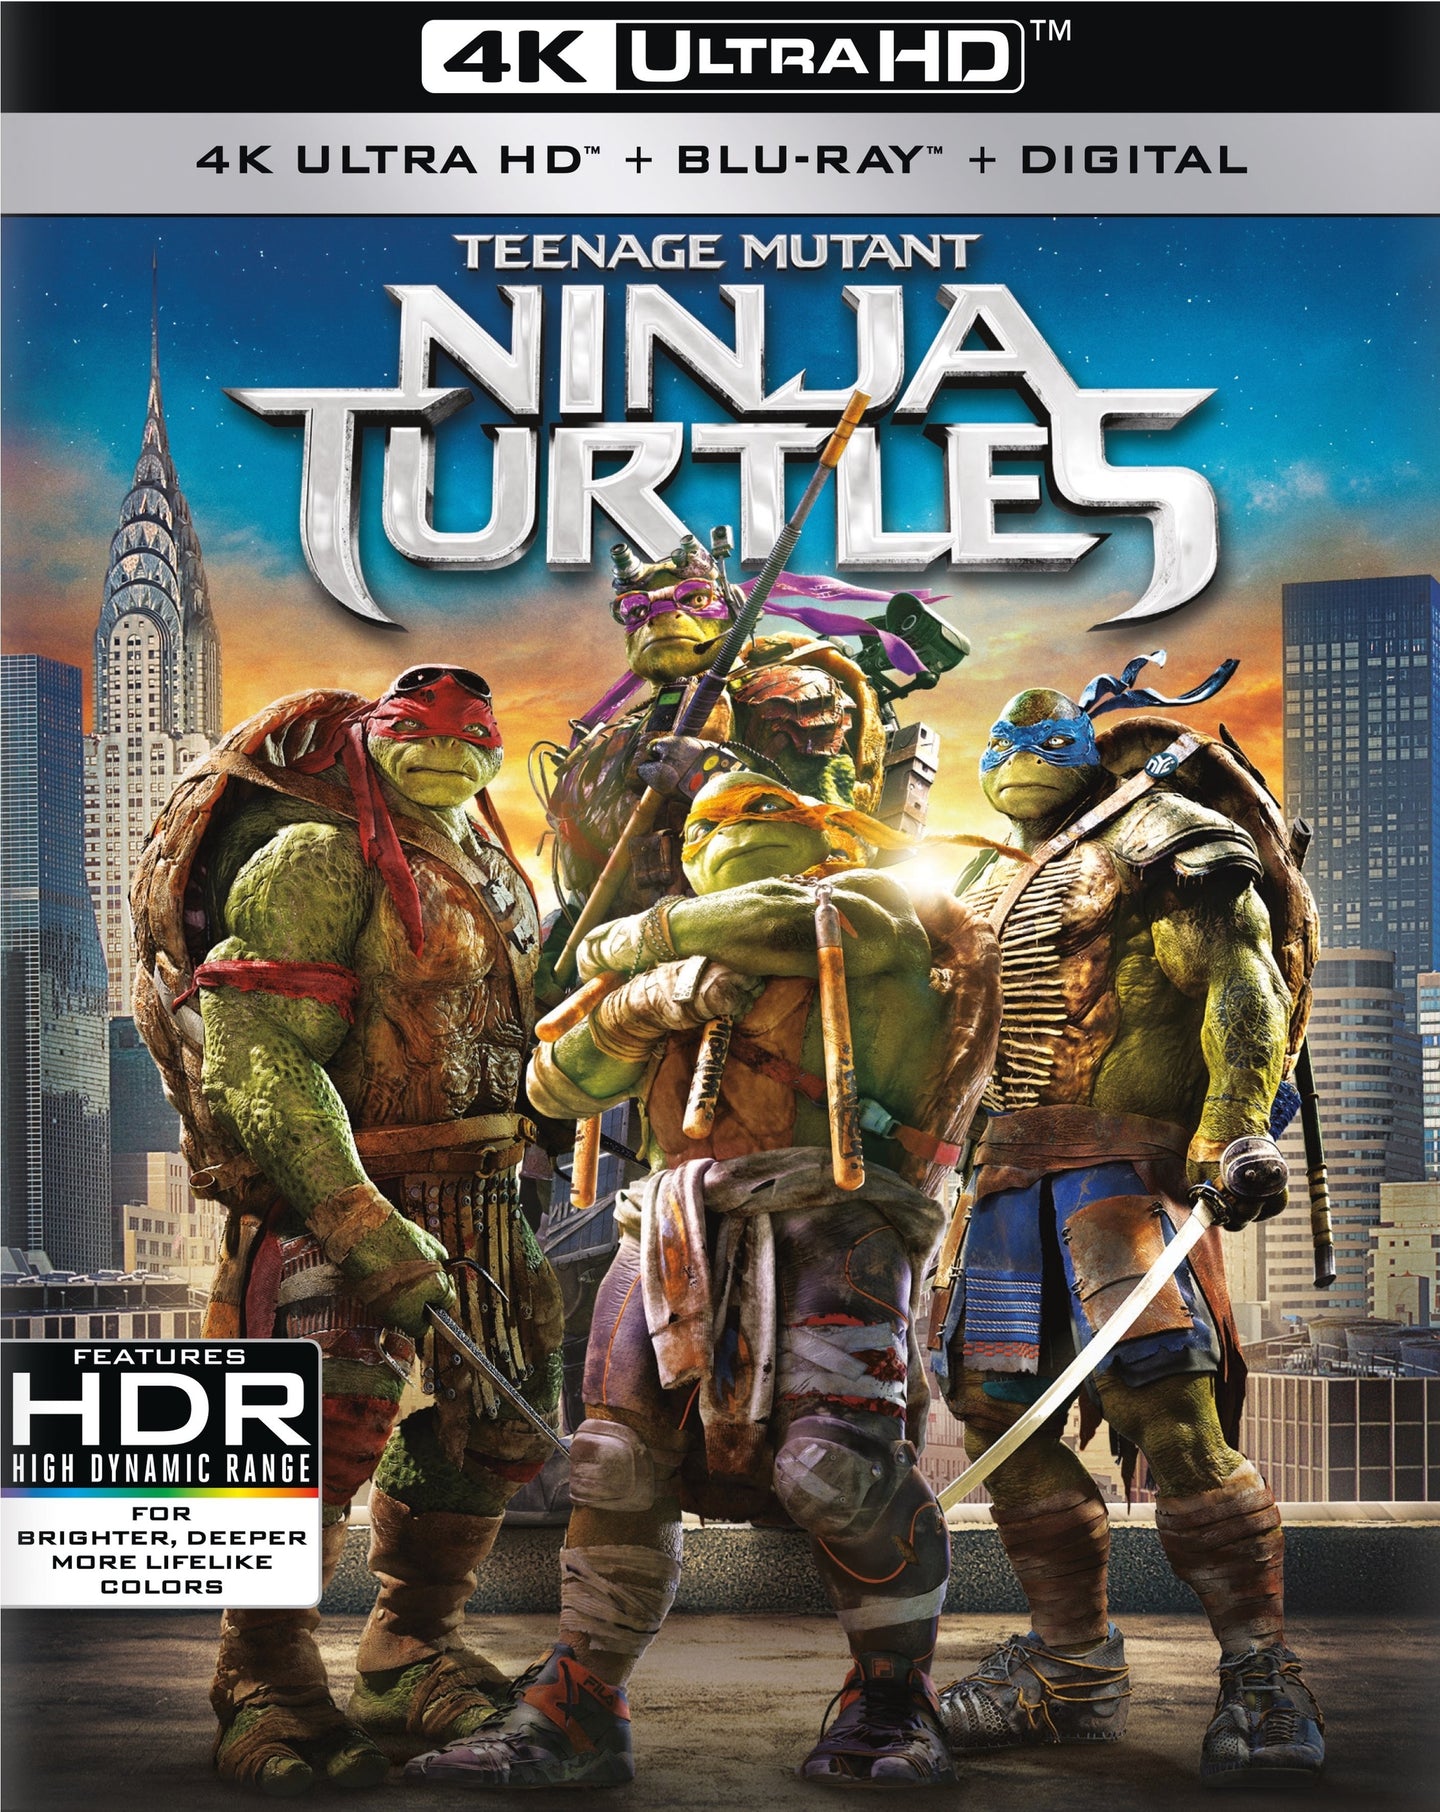 Teenage Mutant Ninja Turtles (2014) iTunes 4K redemption only